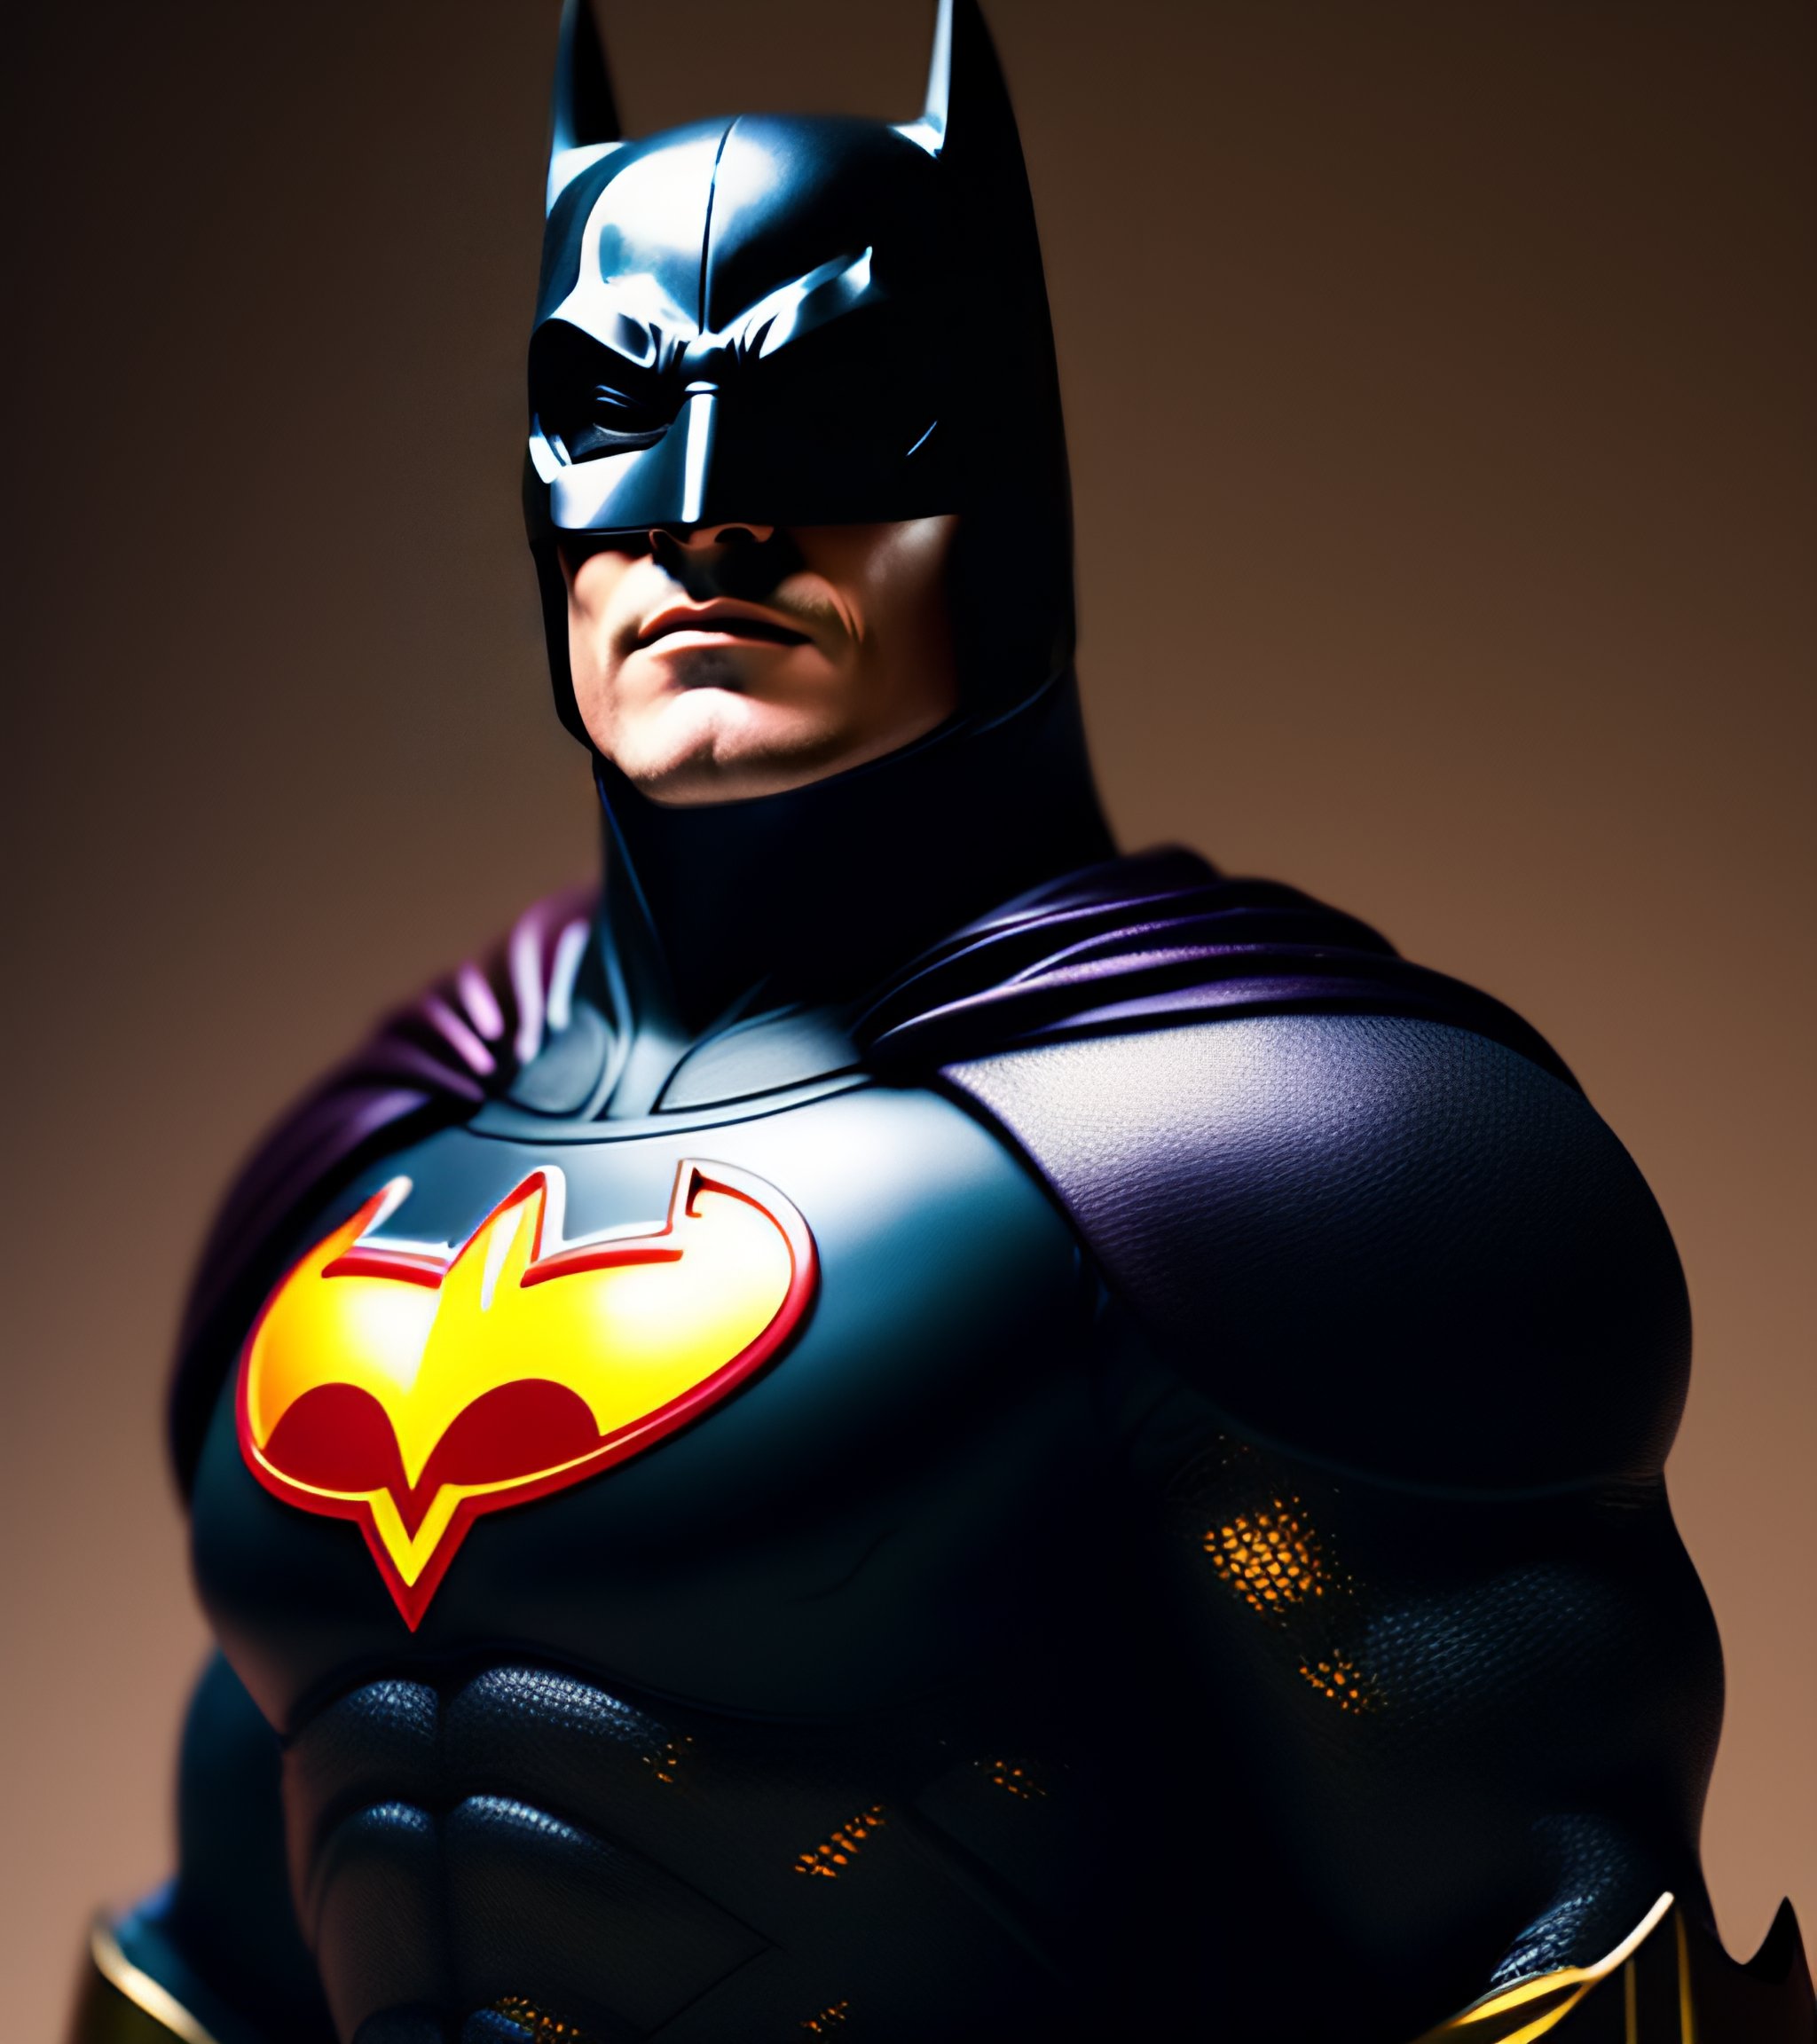 Lexica - Joaquin phoenix as Batman, full hd image and full body presentation